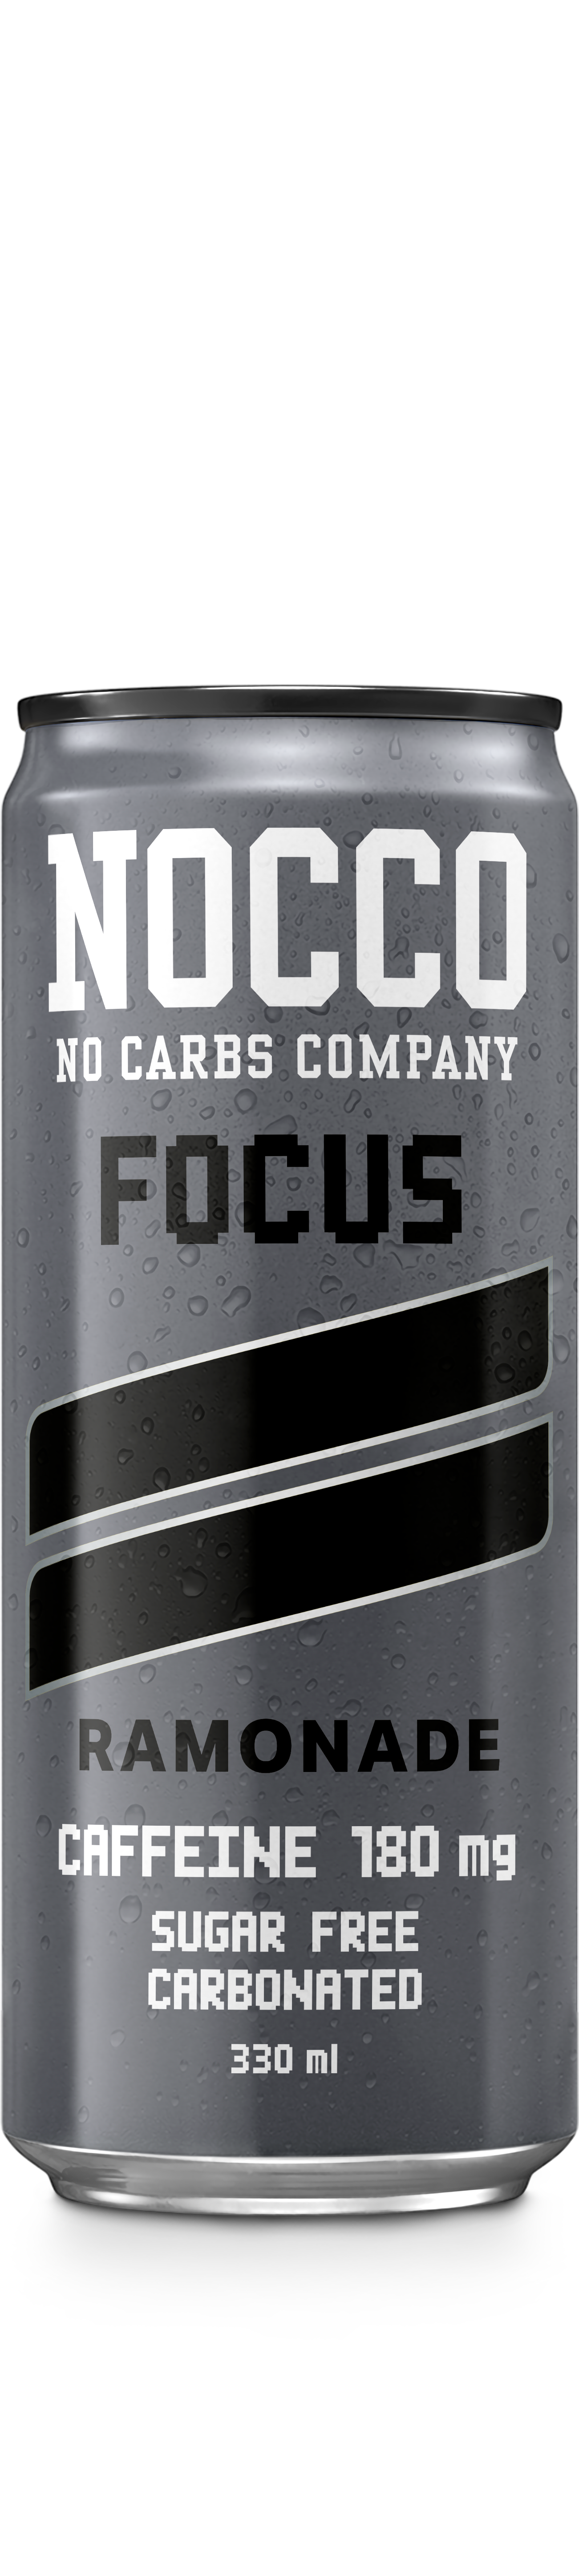 Performance drinks brand NOCCO broadens their portfolio with Focus Ramonade